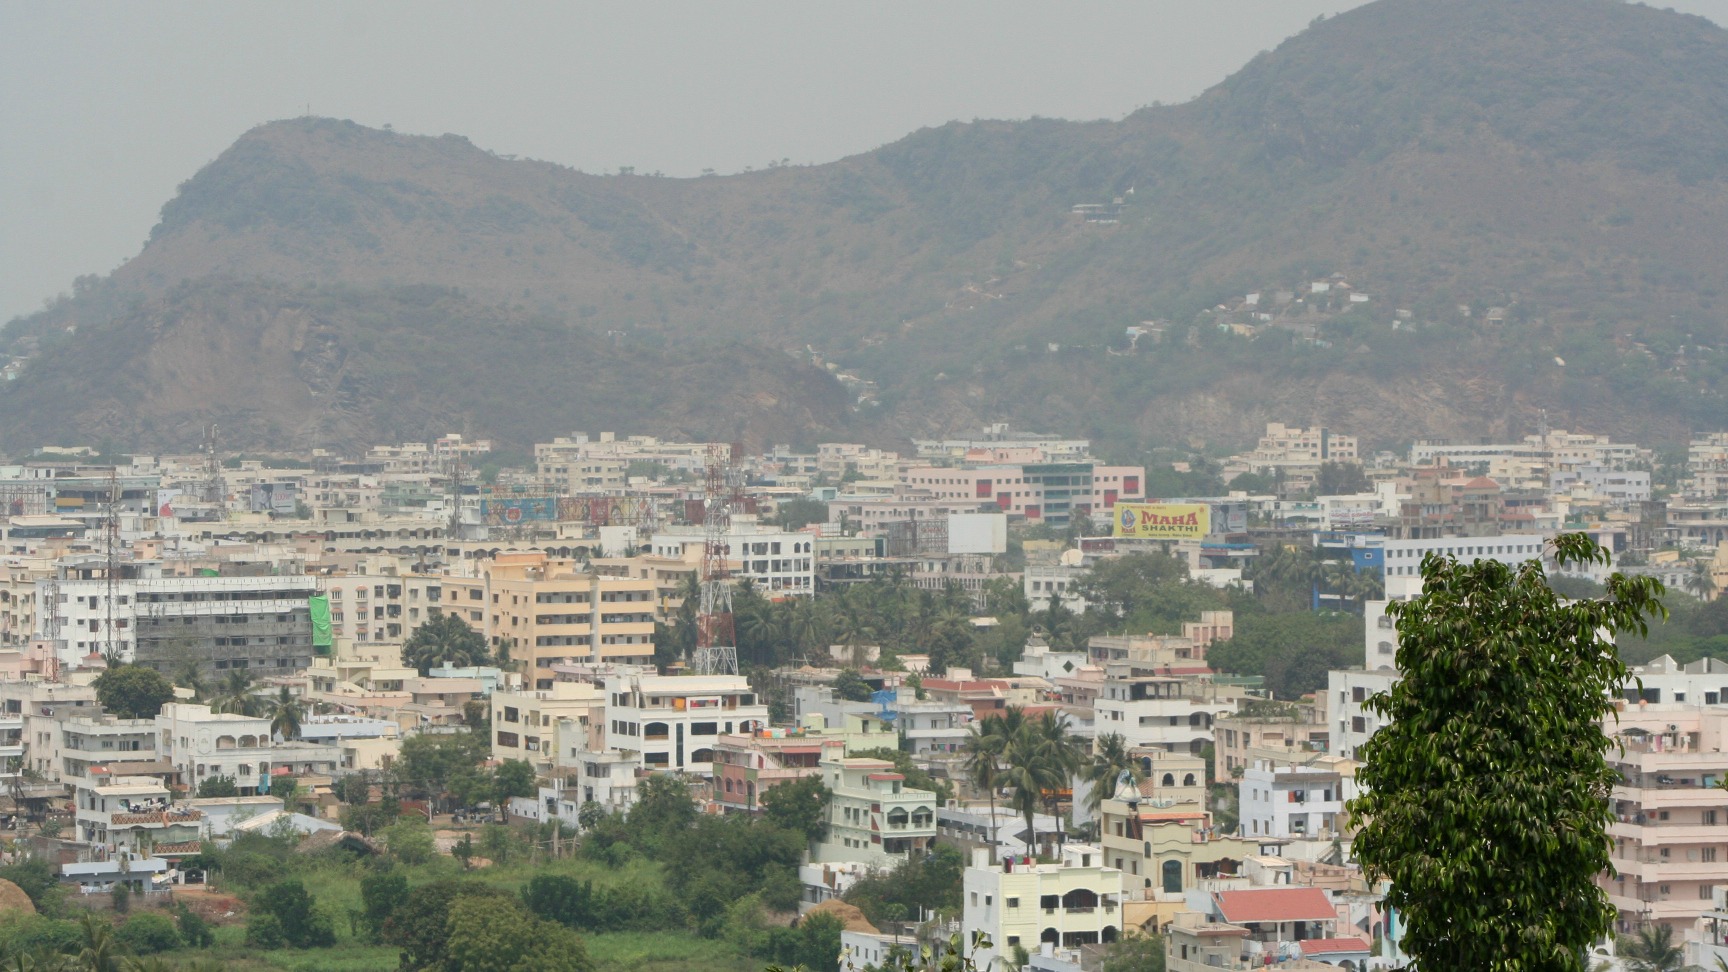 Vue de la ville de Vijayawada, au sud de l'Inde (Photo:Vijay Chennupati/Flickr/CC BY 2.0)